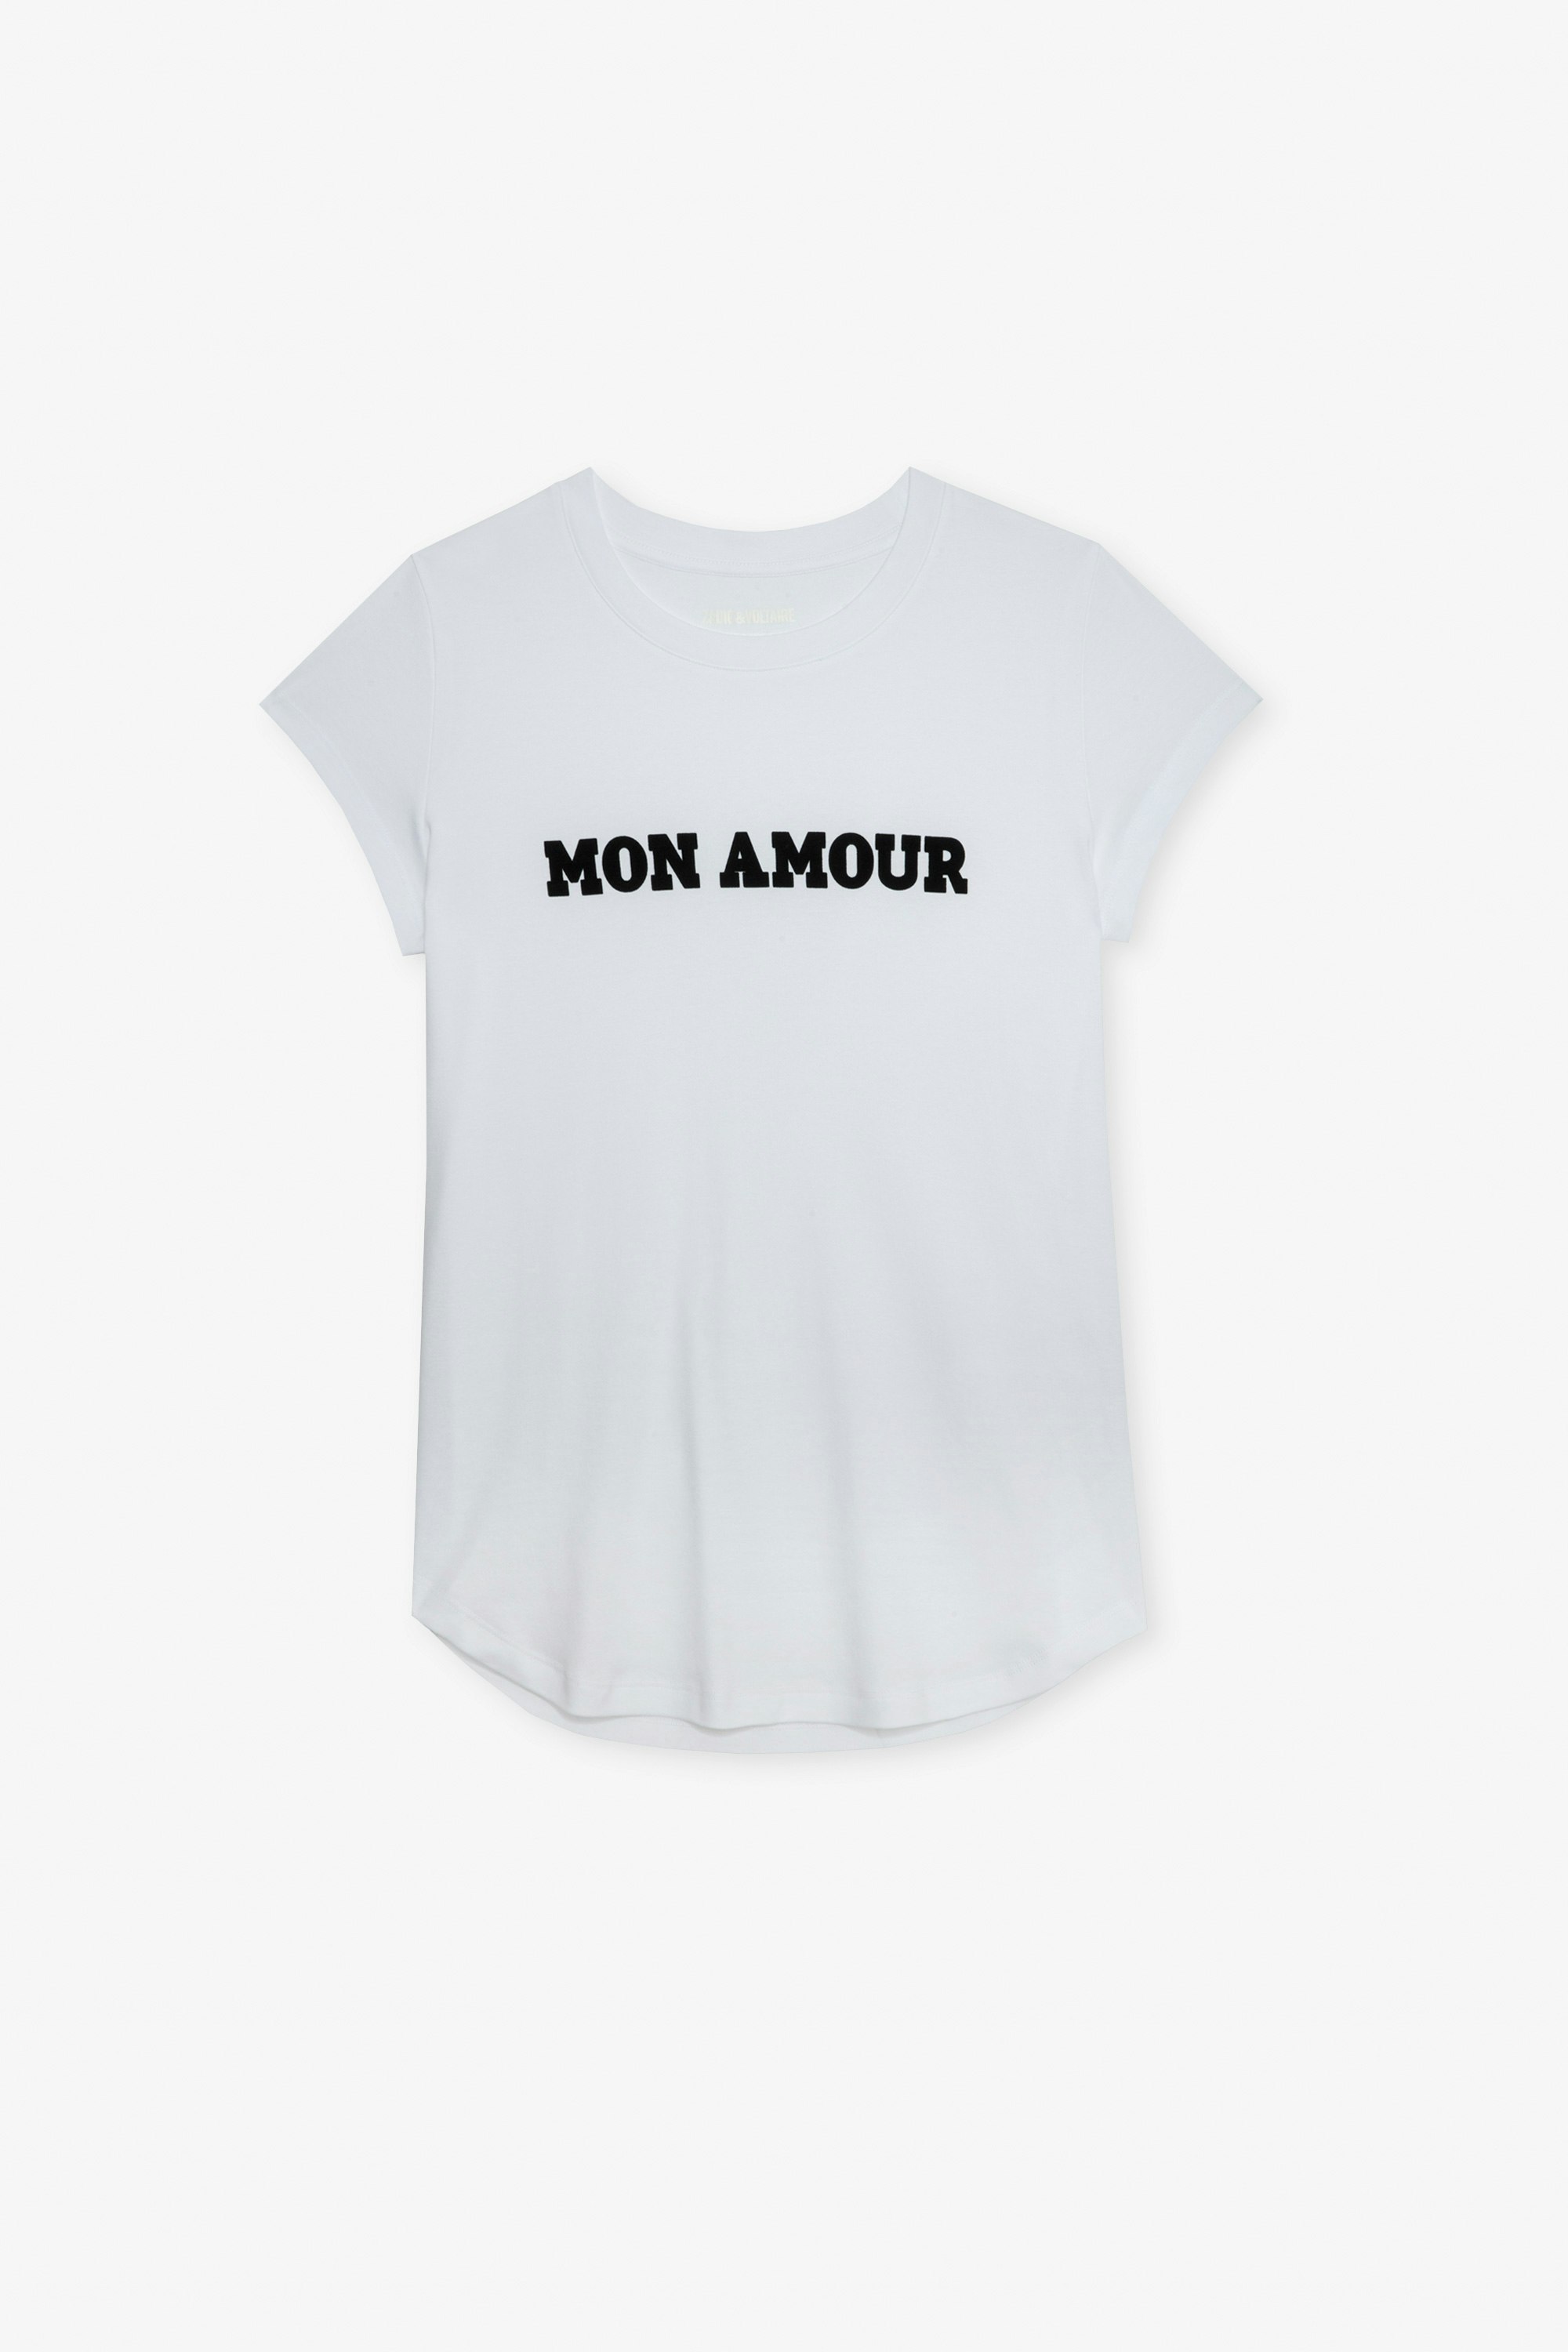 Camiseta Woop Mon Amour - Camiseta blanca de algodón con inscripción "Mon amour" para mujer.